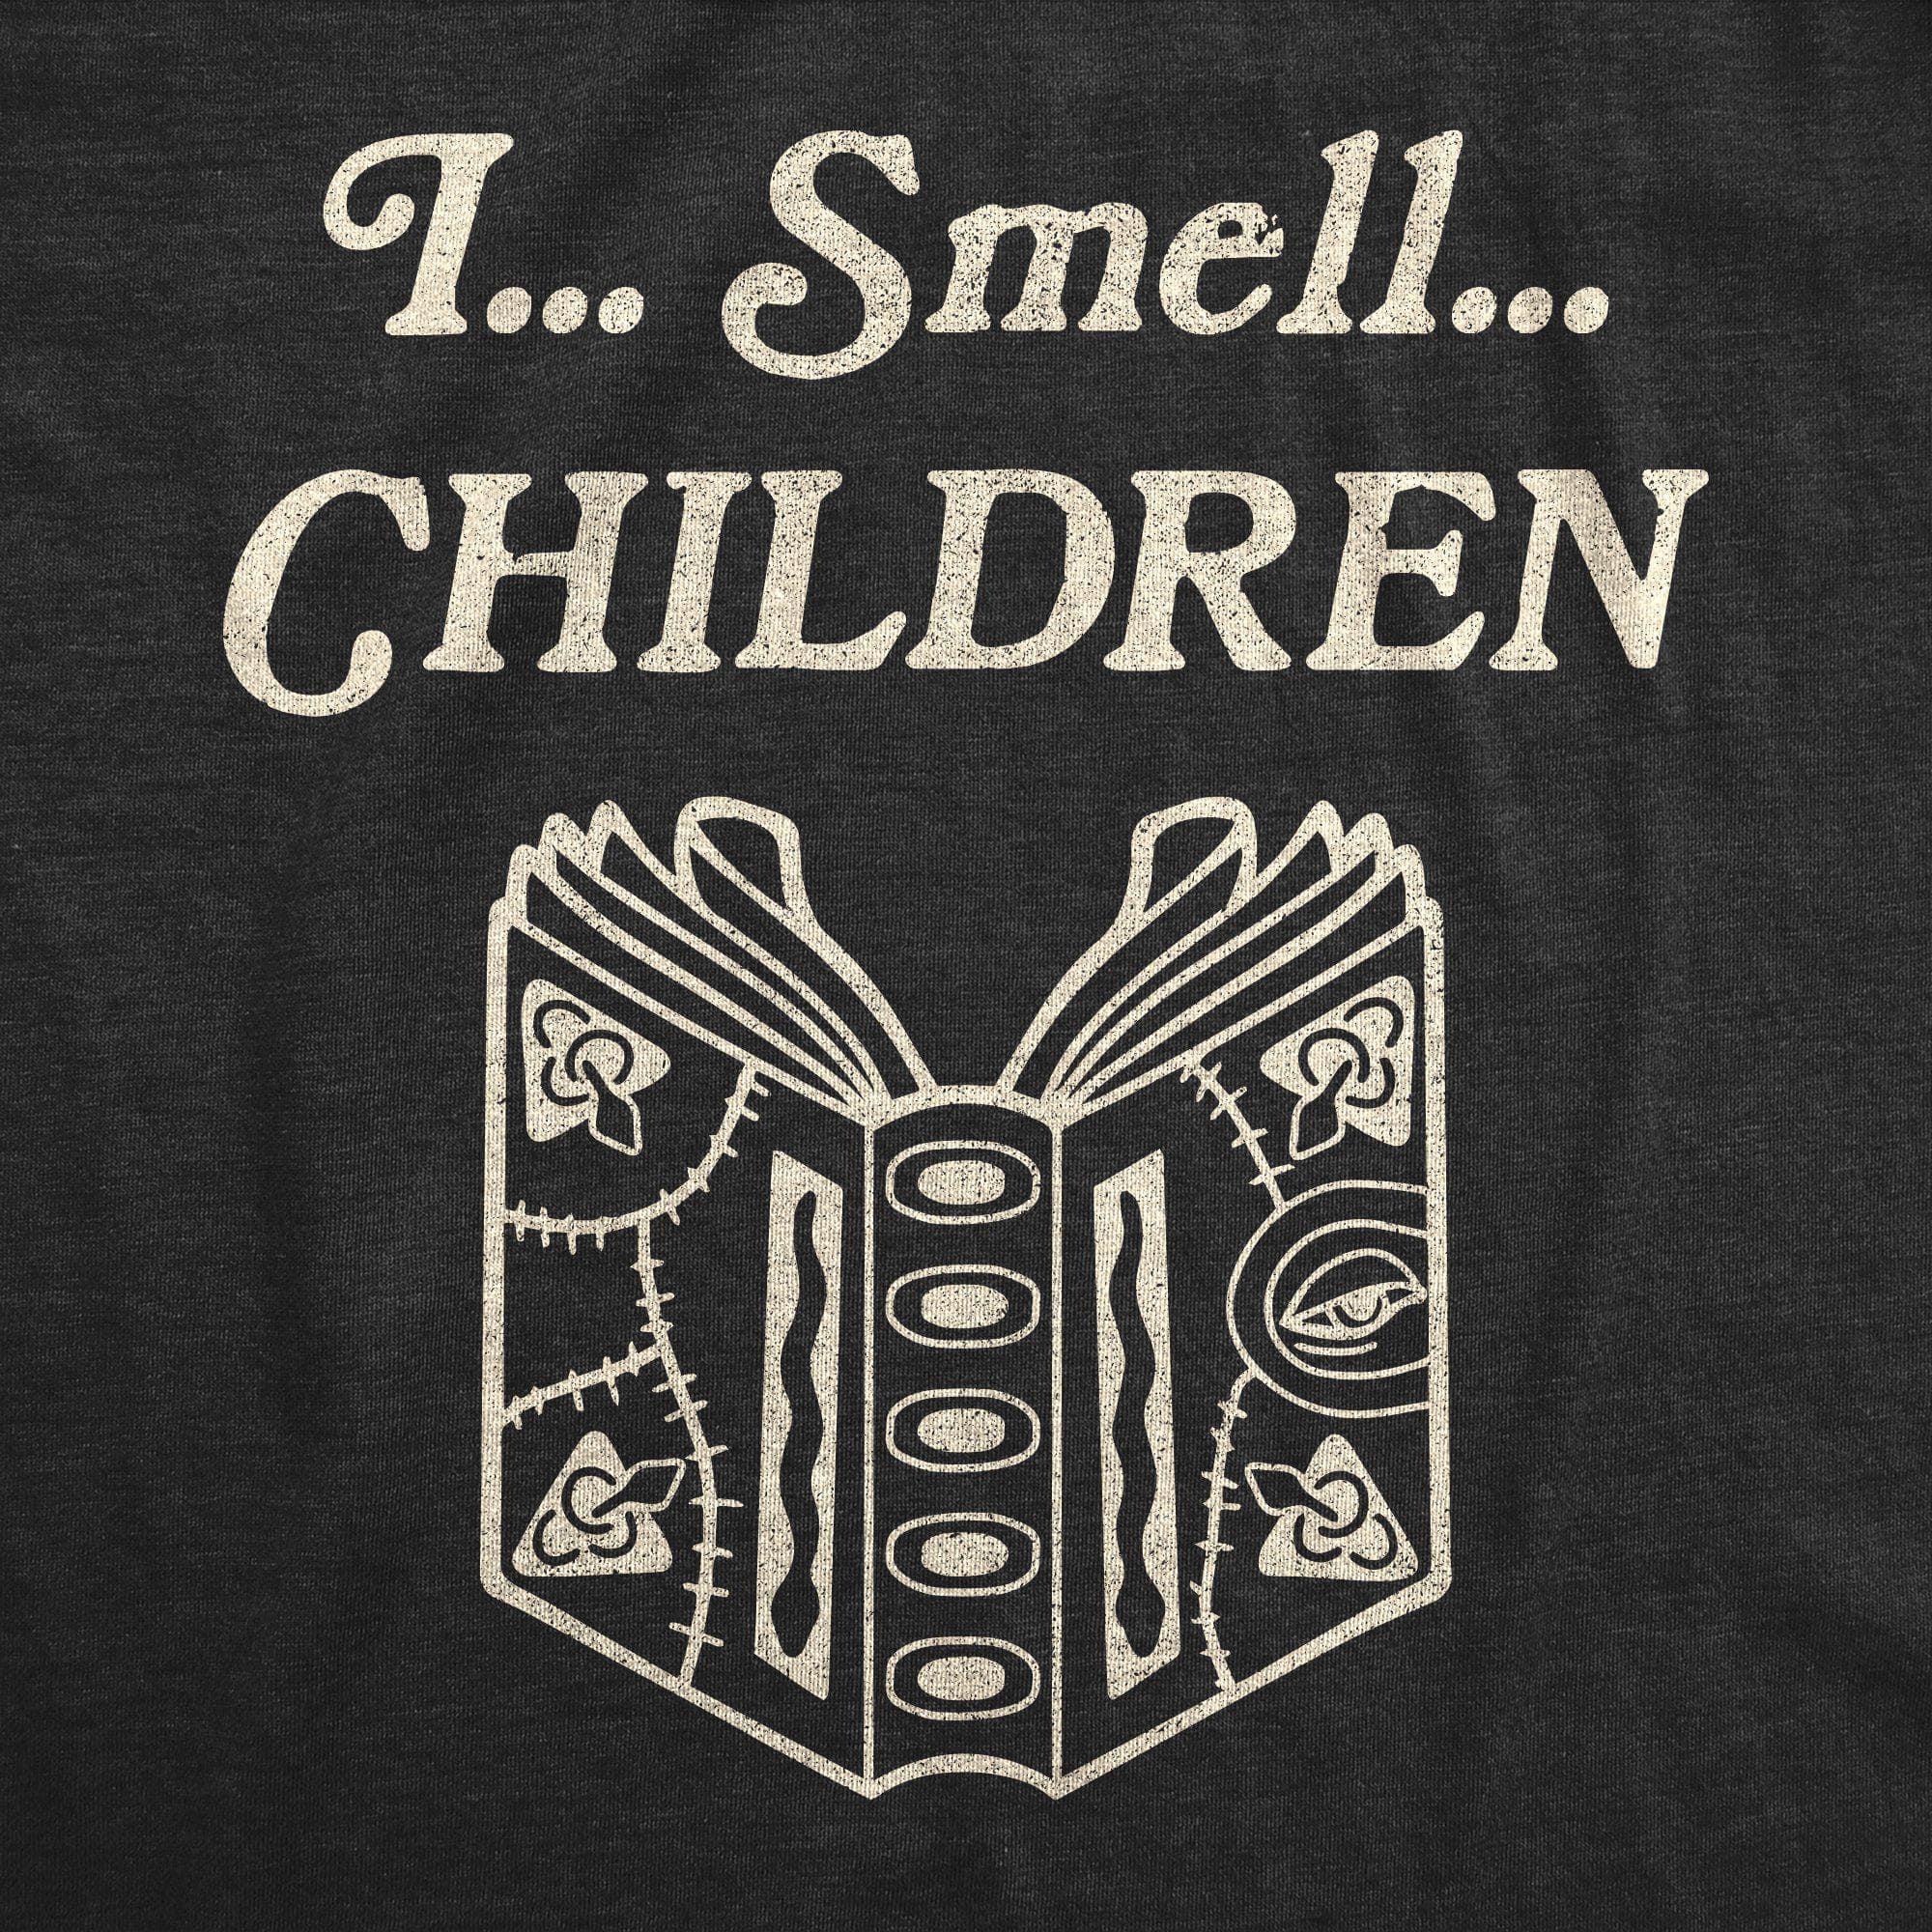 I Smell Children Men's Tshirt - Crazy Dog T-Shirts